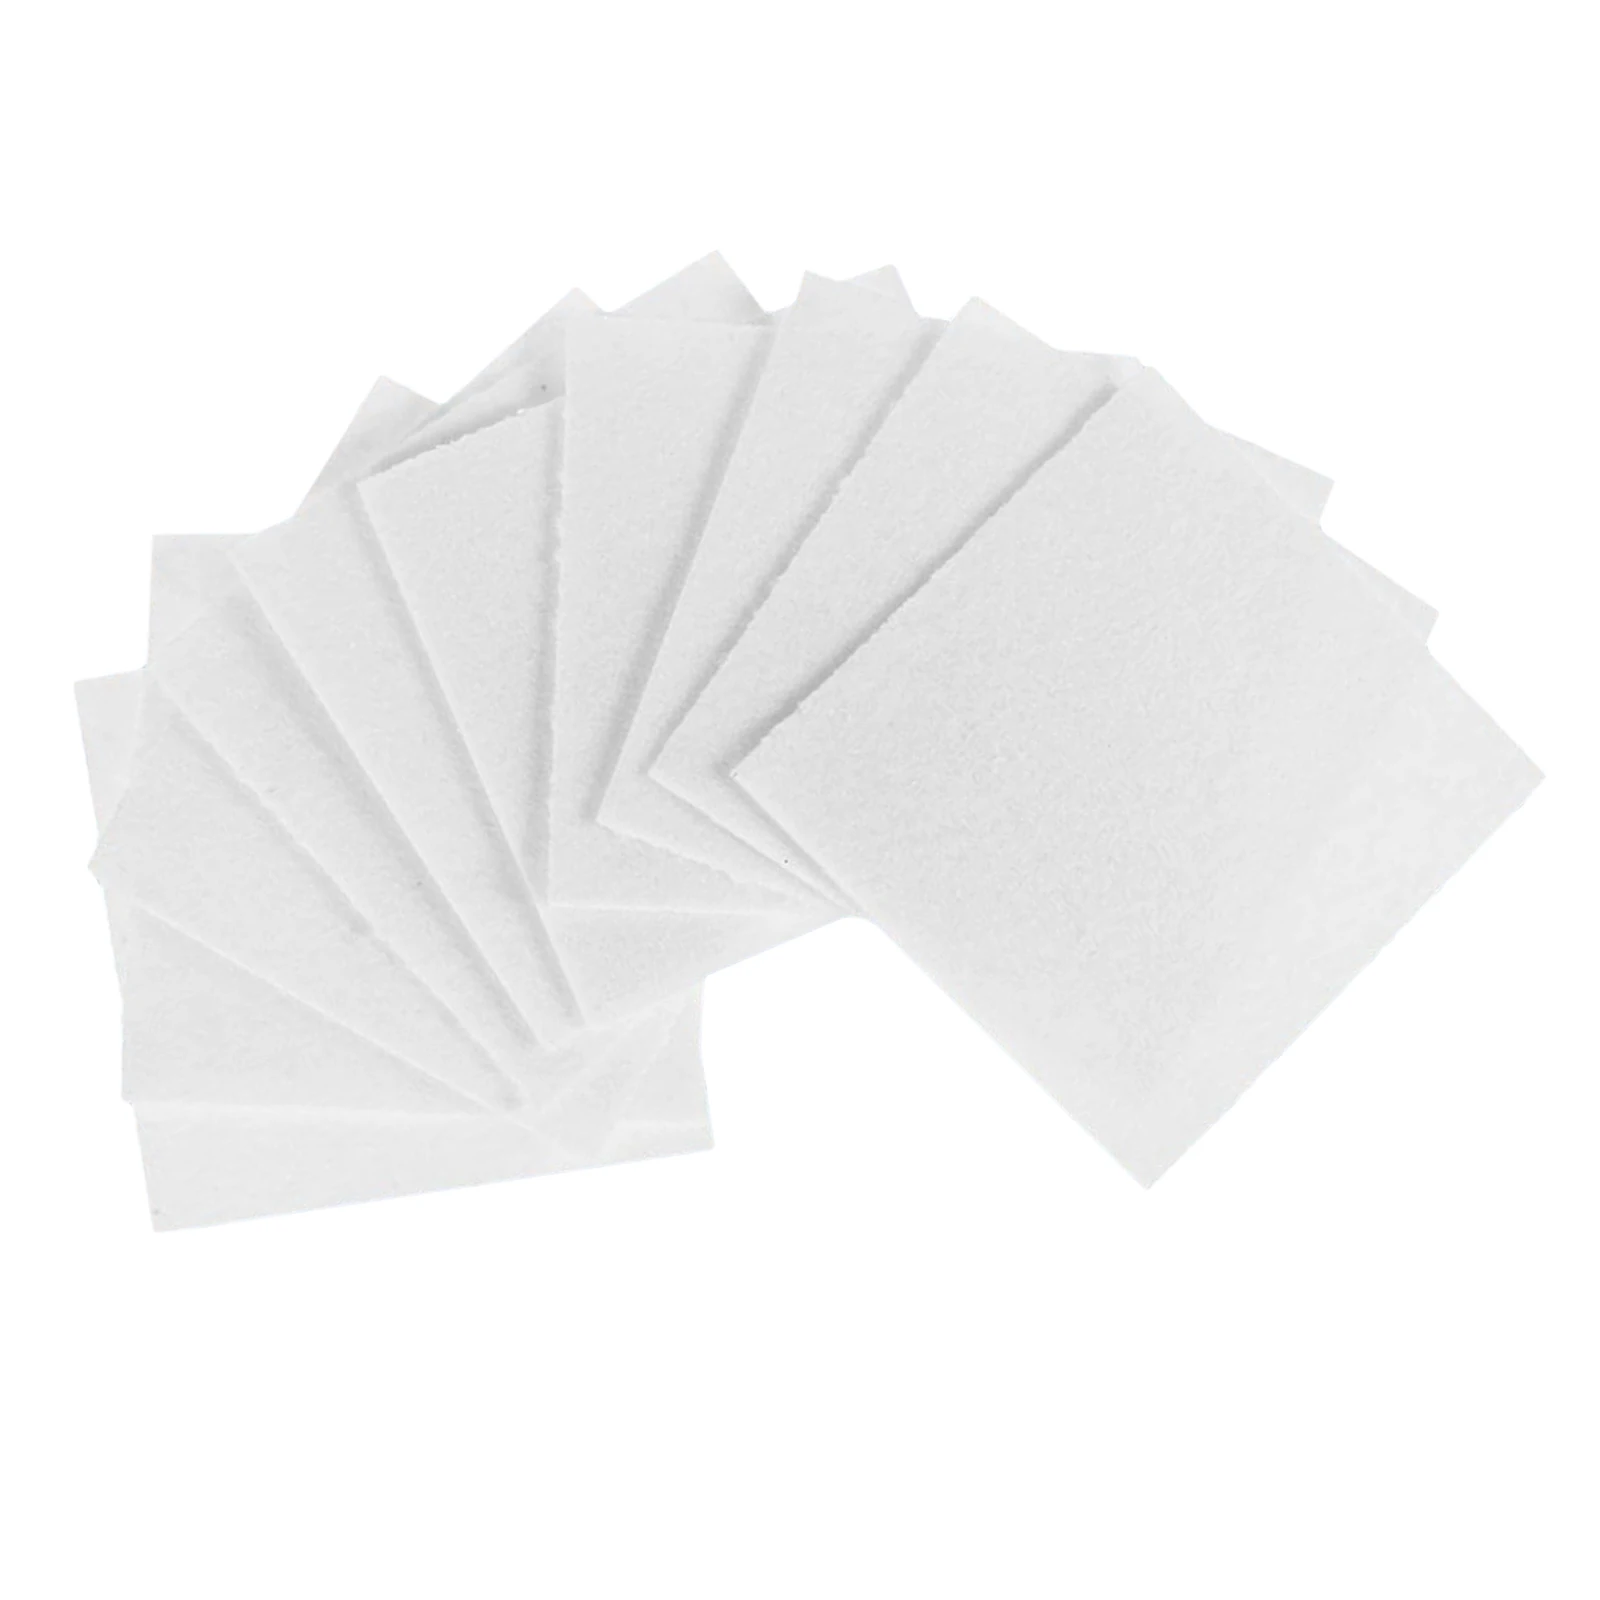 50 Sheets Microwave Kiln Glass Fusing Paper Ceramic Fiber Square 80*80mm